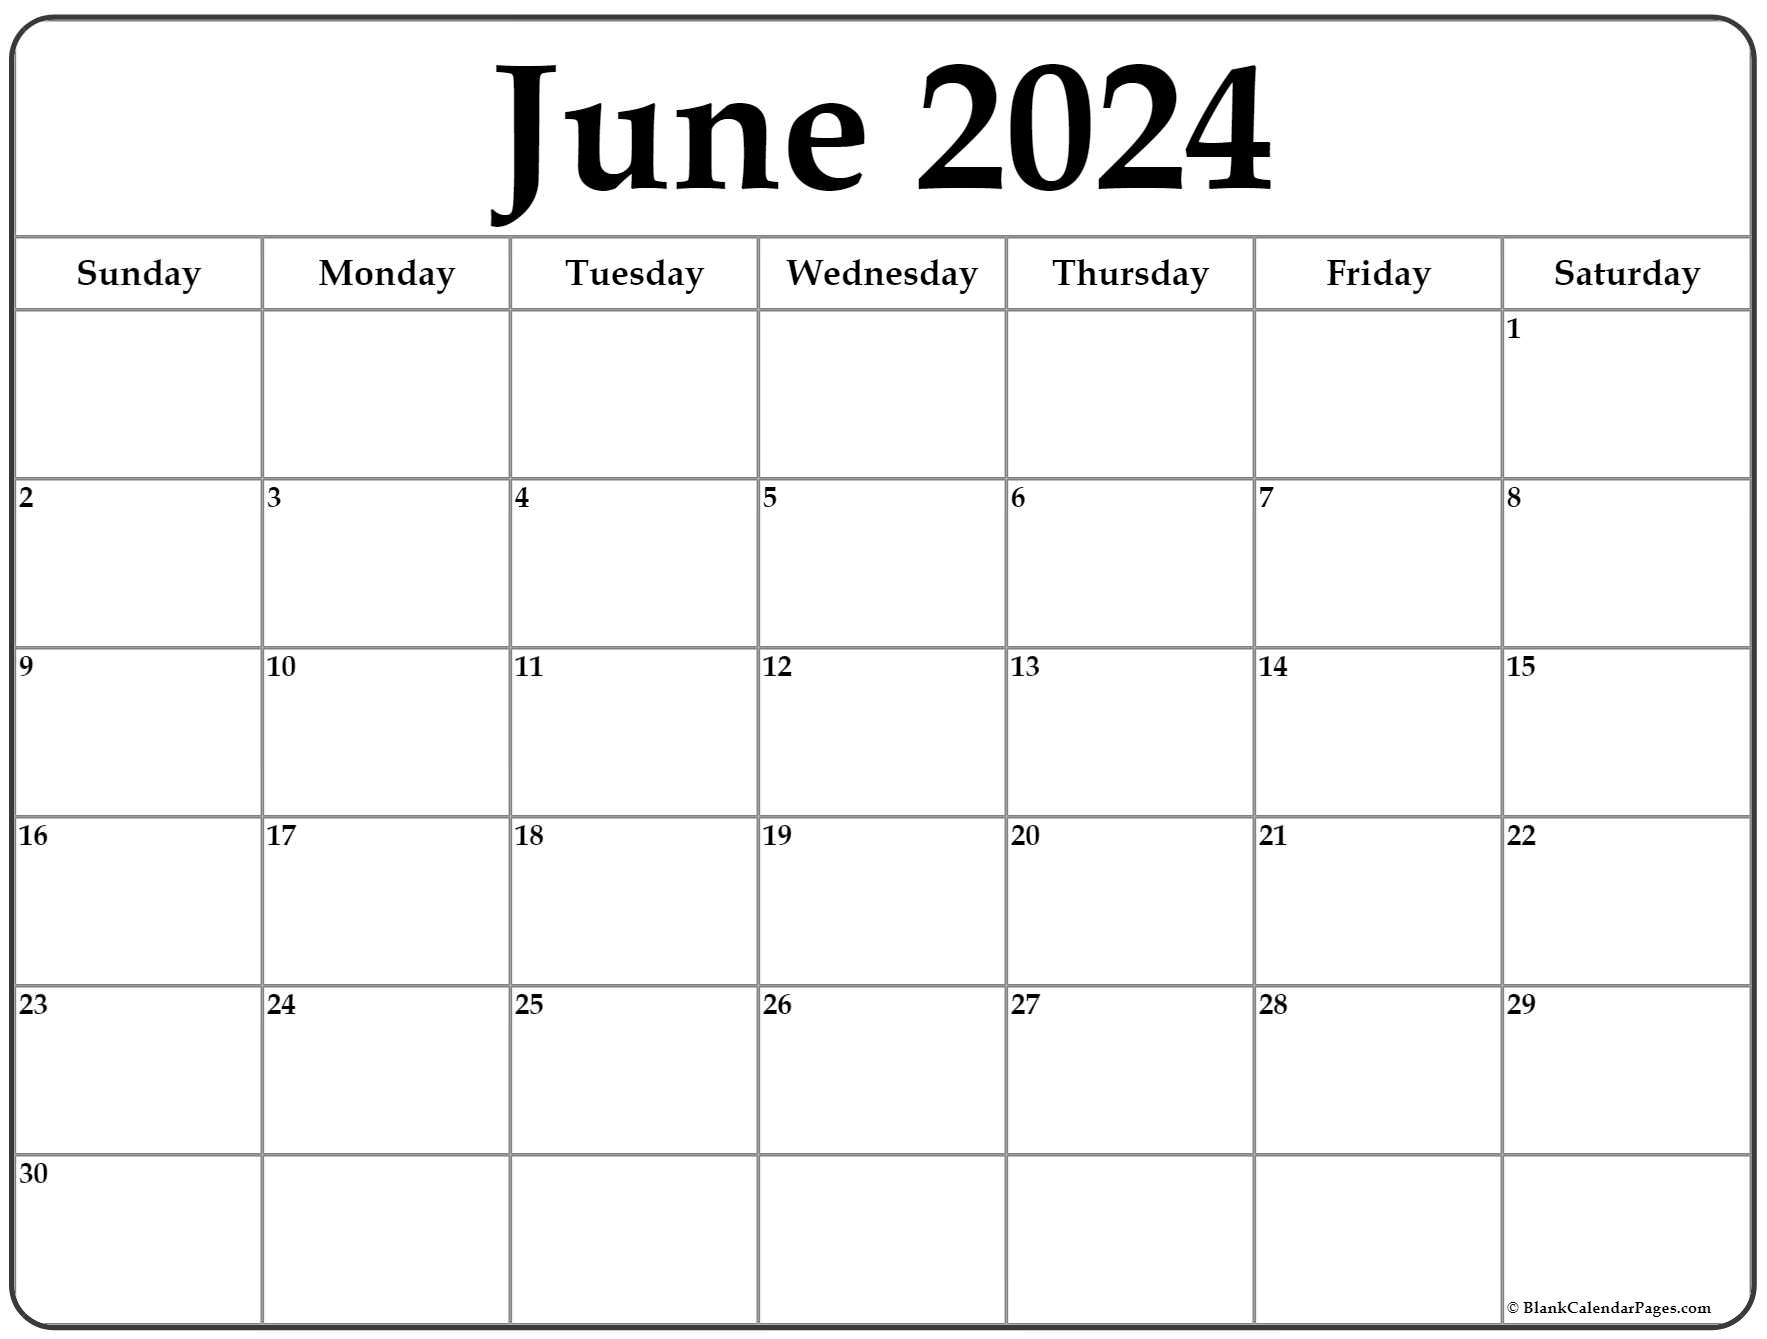 June 2024 Calendar | Free Printable Calendar | Printable Calendar June 2024 Free